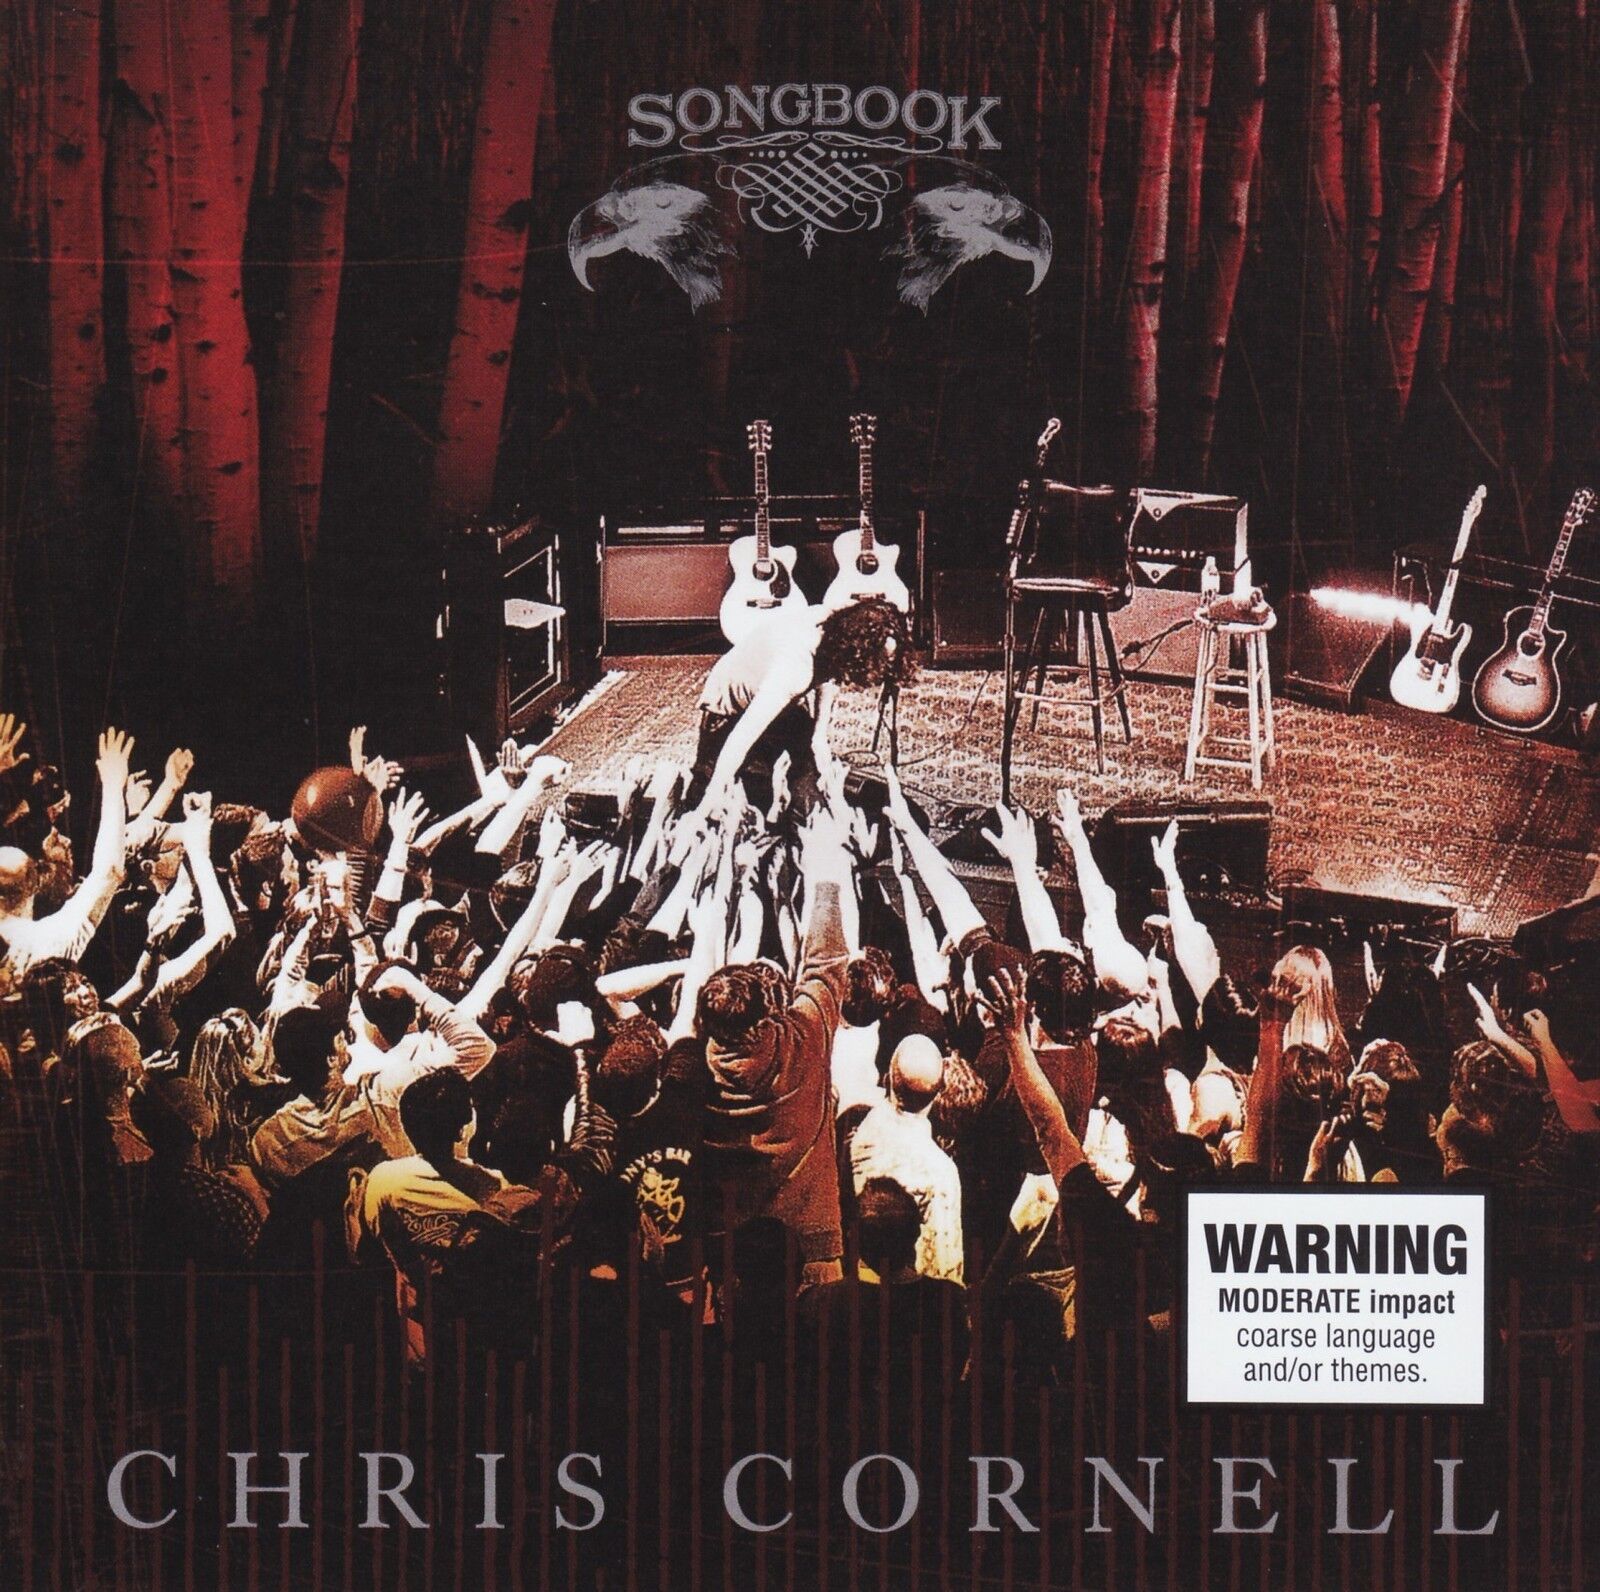 CHRIS CORNELL - SONGBOOK CD ( AUDIOSLAVE / SOUNDGARDEN ) *NEW*